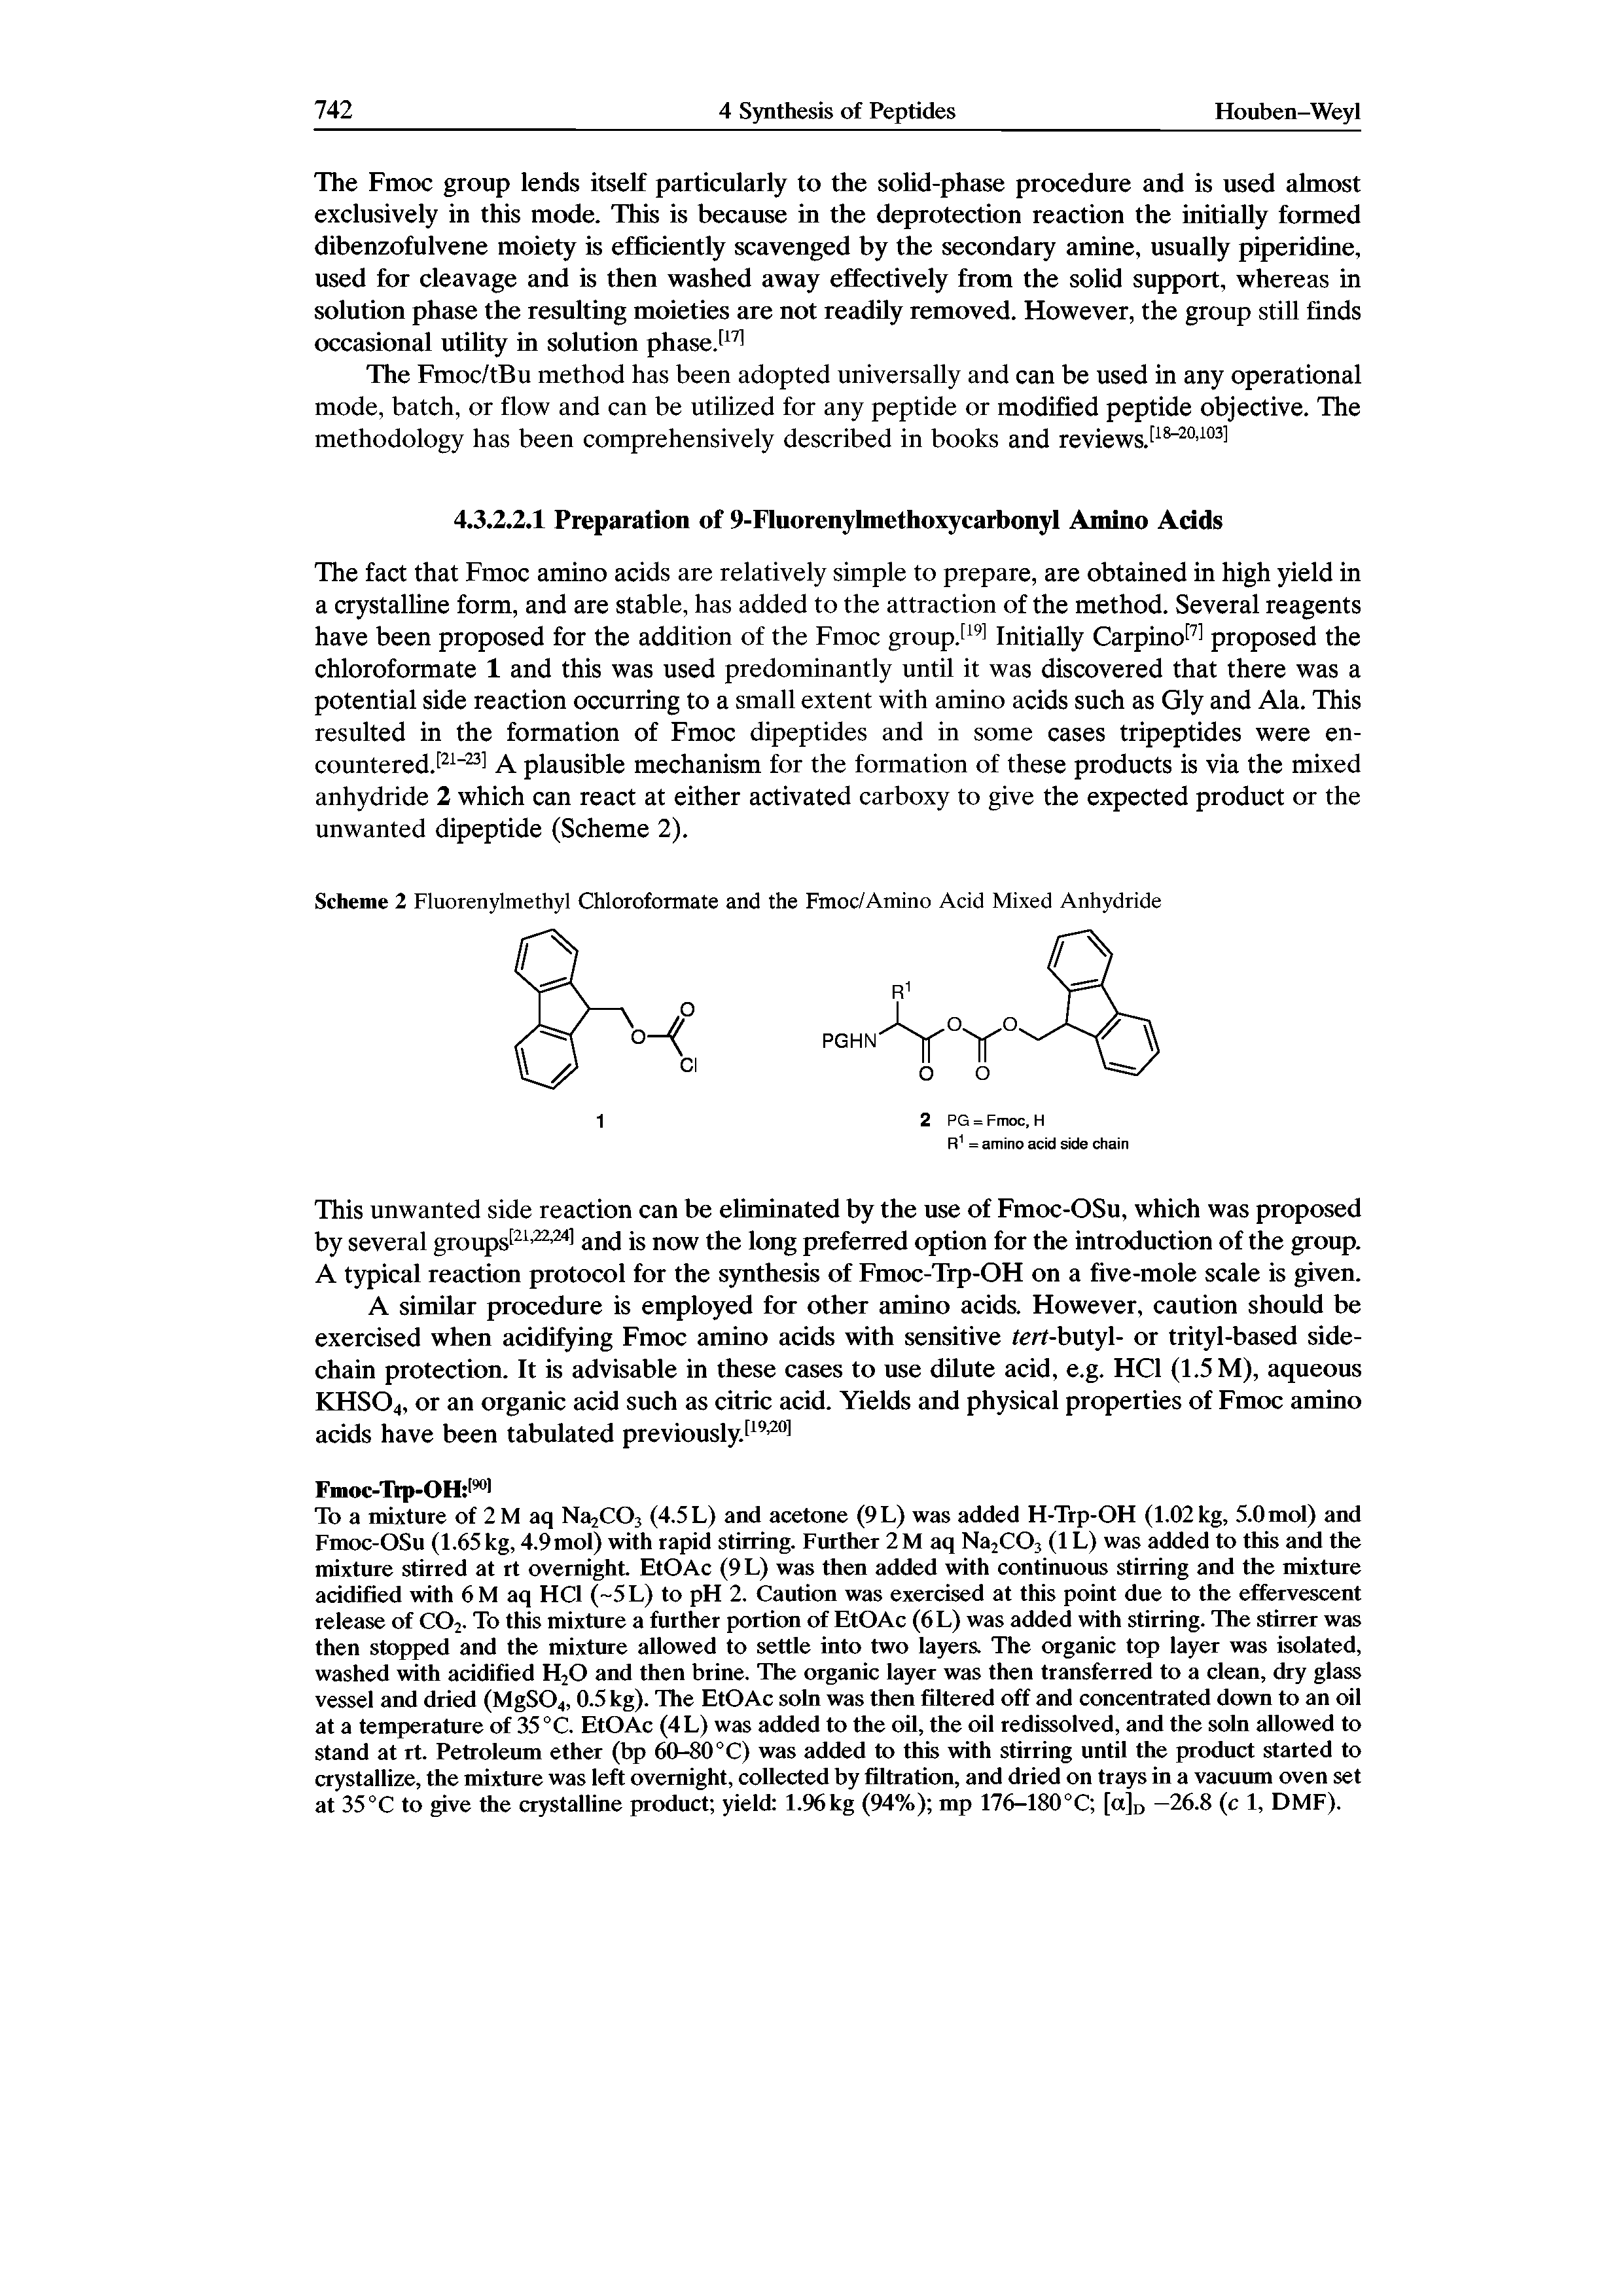 Scheme 2 Fluorenylmethyl Chloroformate and the Fmoc/Amino Acid Mixed Anhydride...